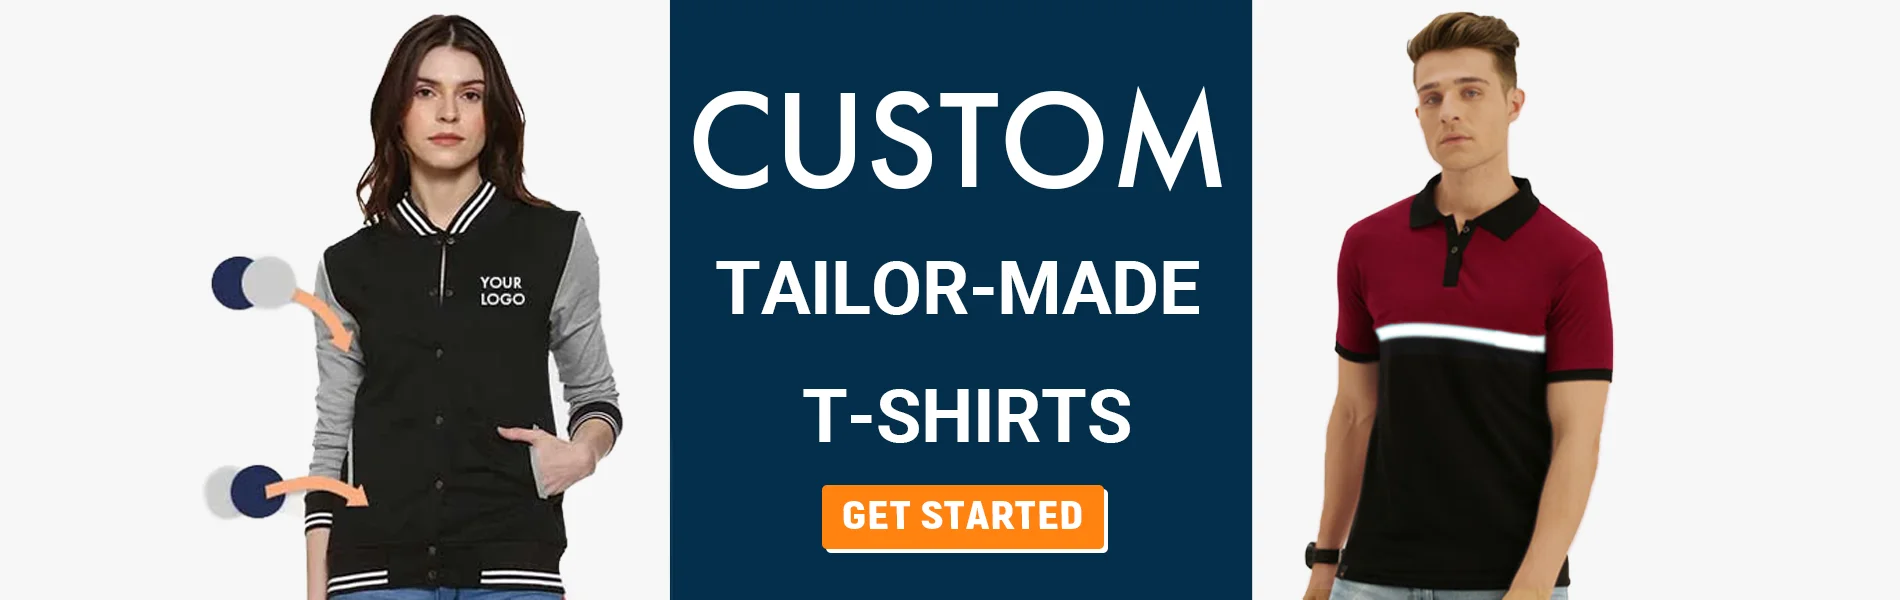 custom tailormade t-shirts guwahati